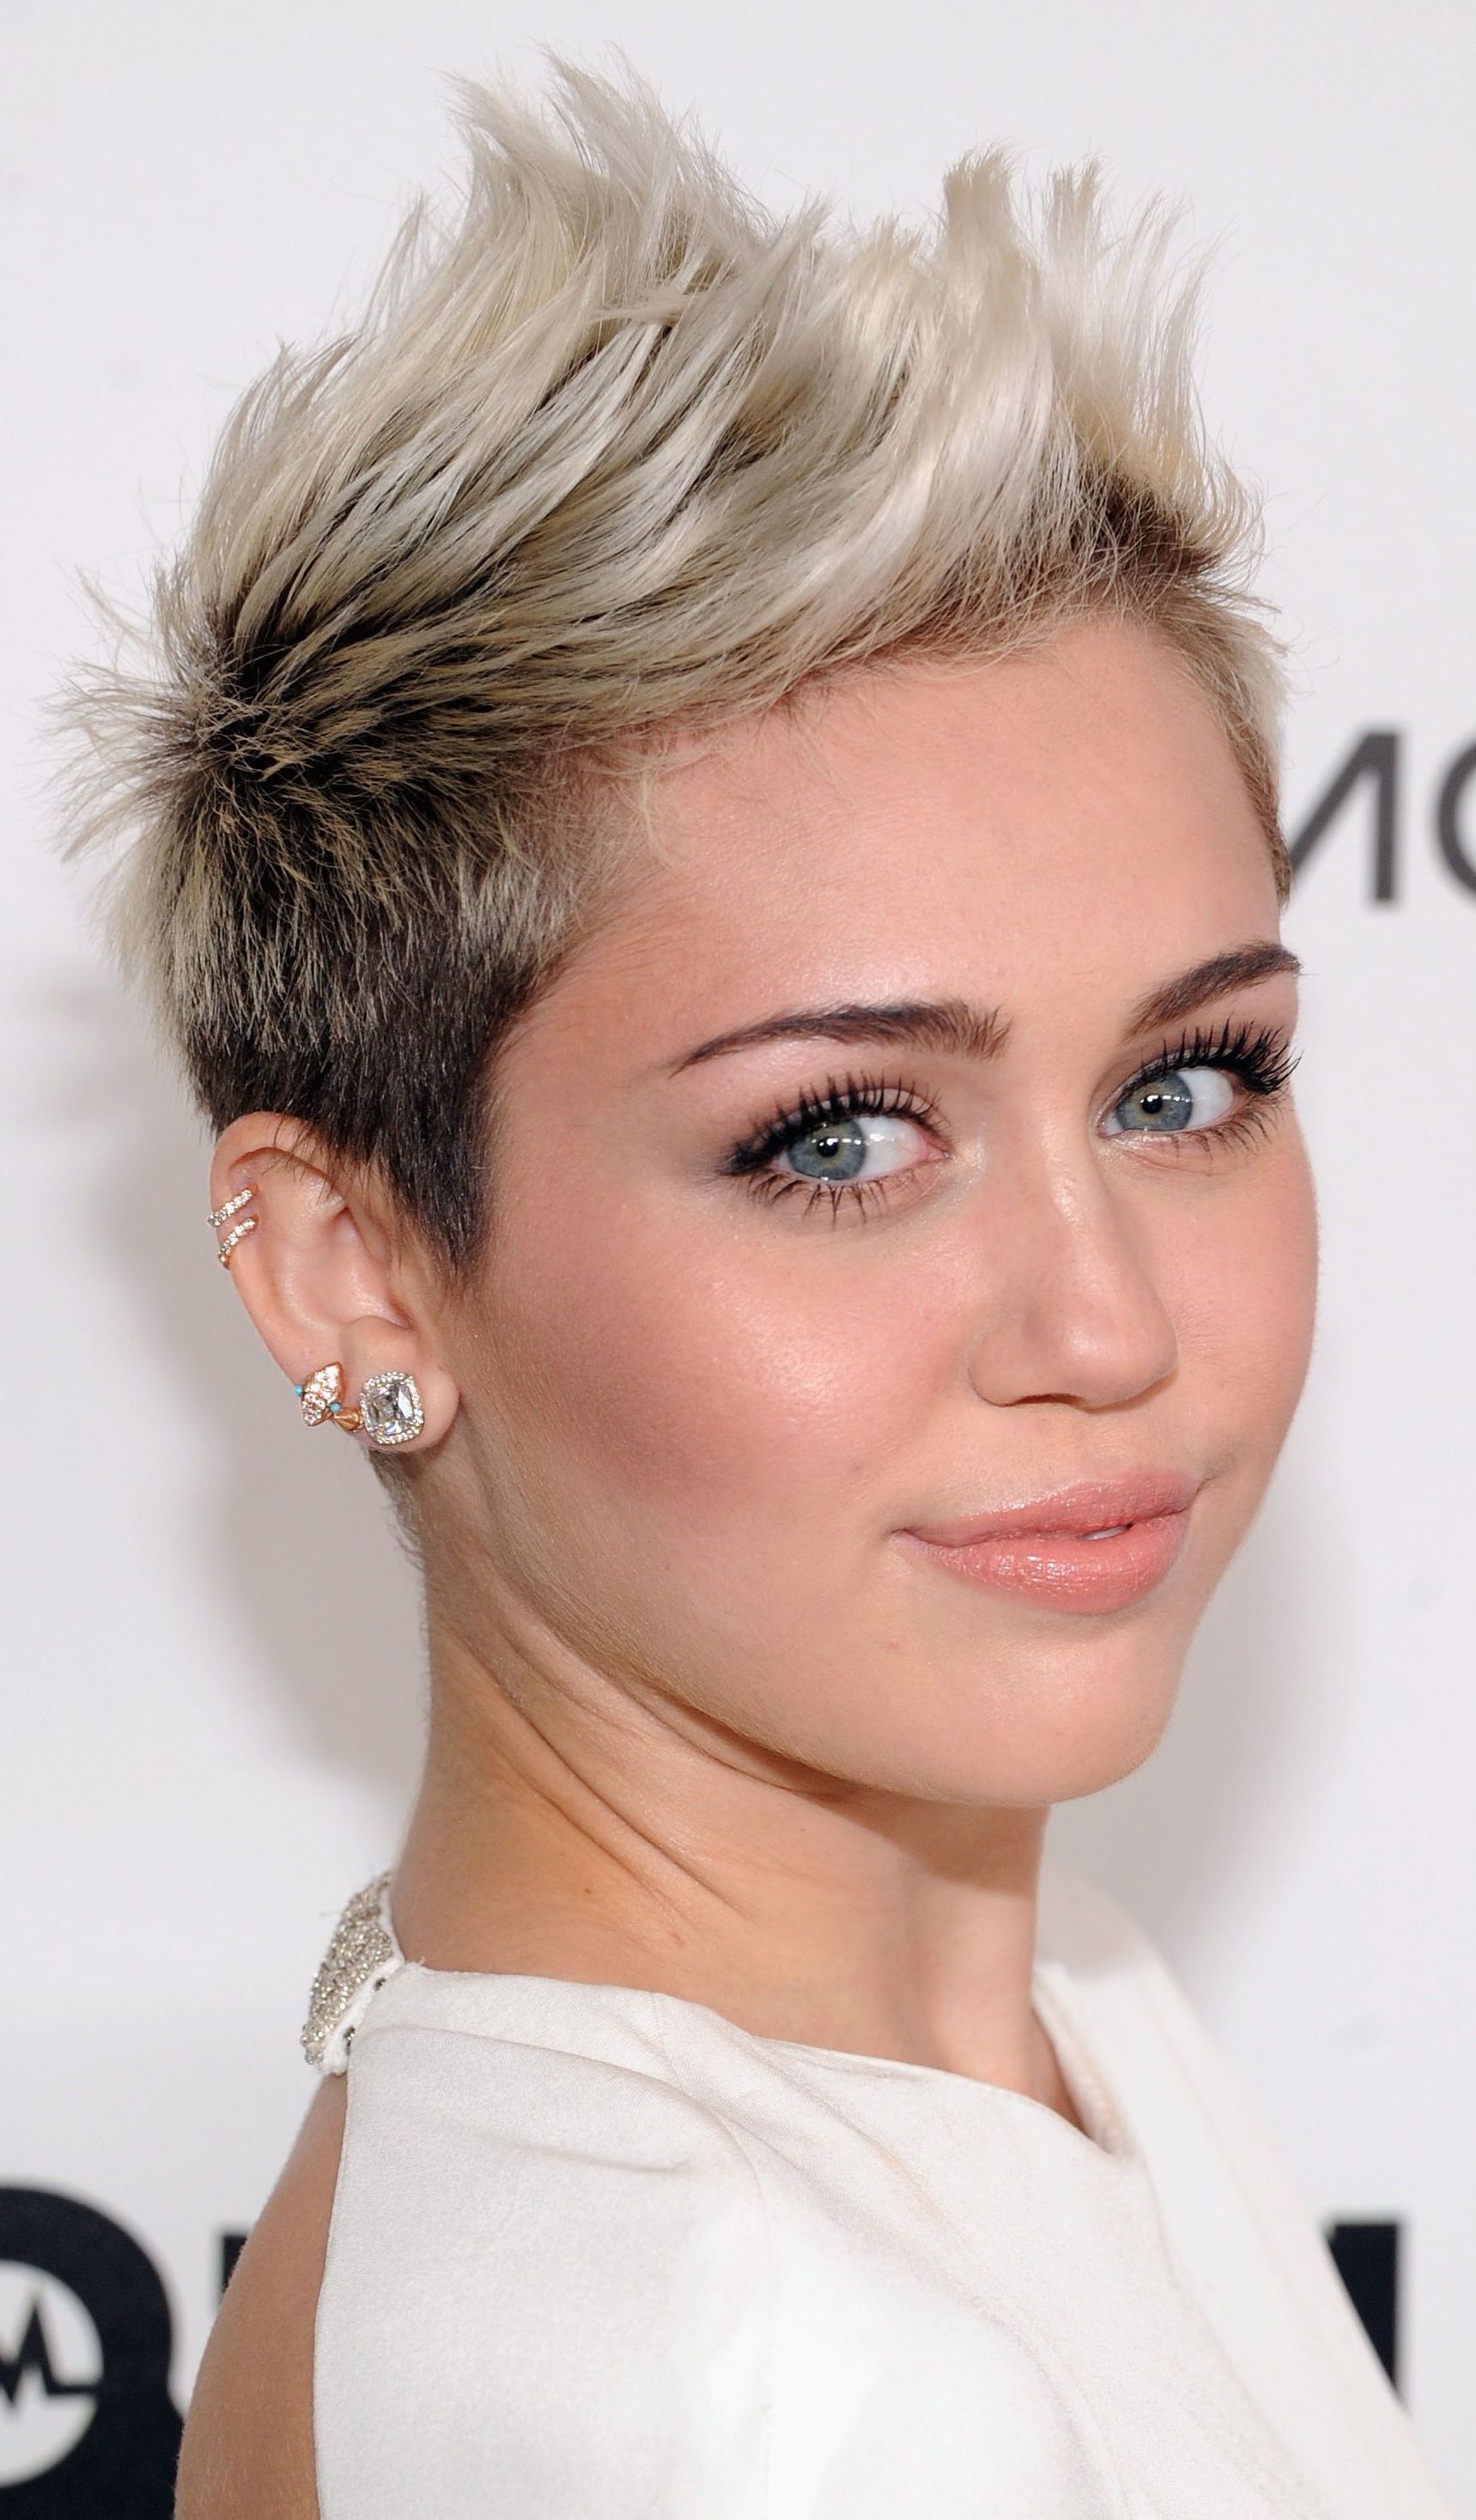 Miley Cyrus: Platinum Blonde Ombre Short Hairstyle In 2018 | Hair For Platinum Blonde Short Hairstyles (Photo 11 of 25)